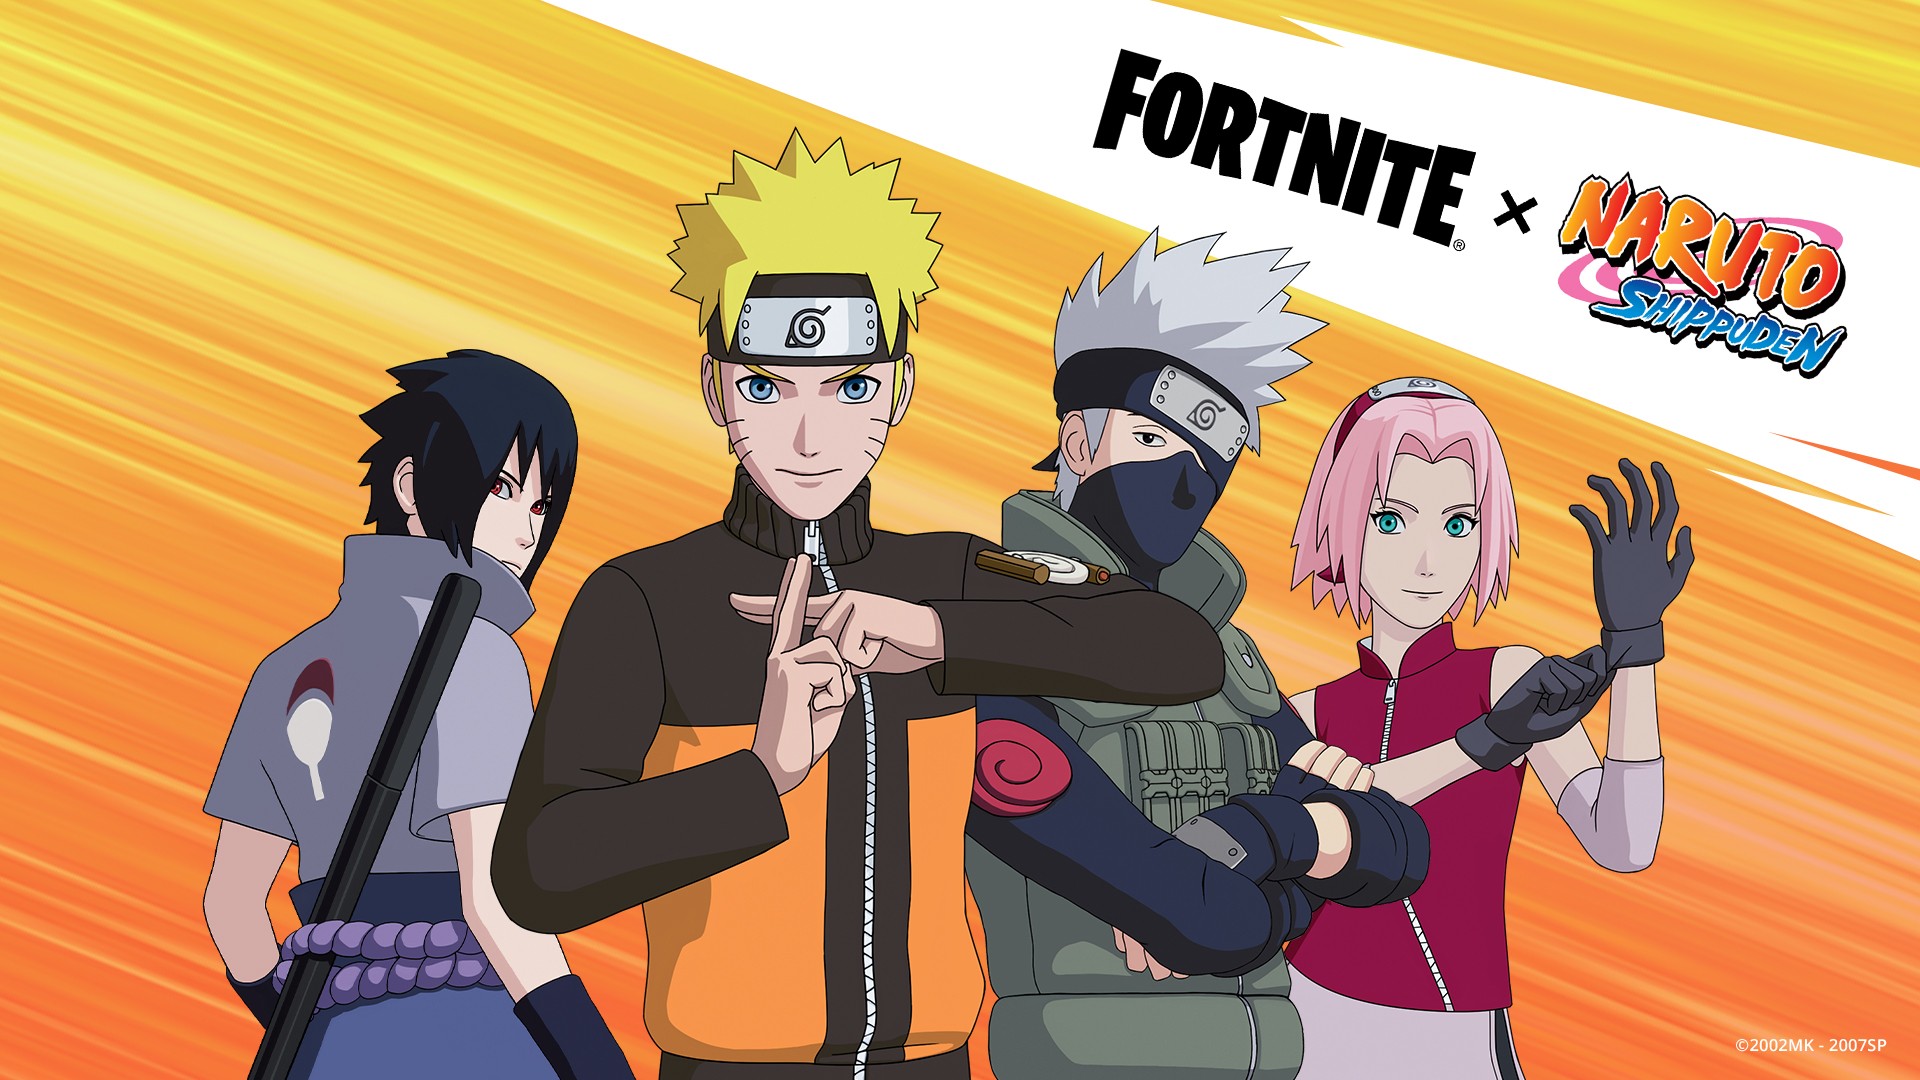 Naruto Uzumaki, the Seventh Hokage of the Hidden Leaf Village, is